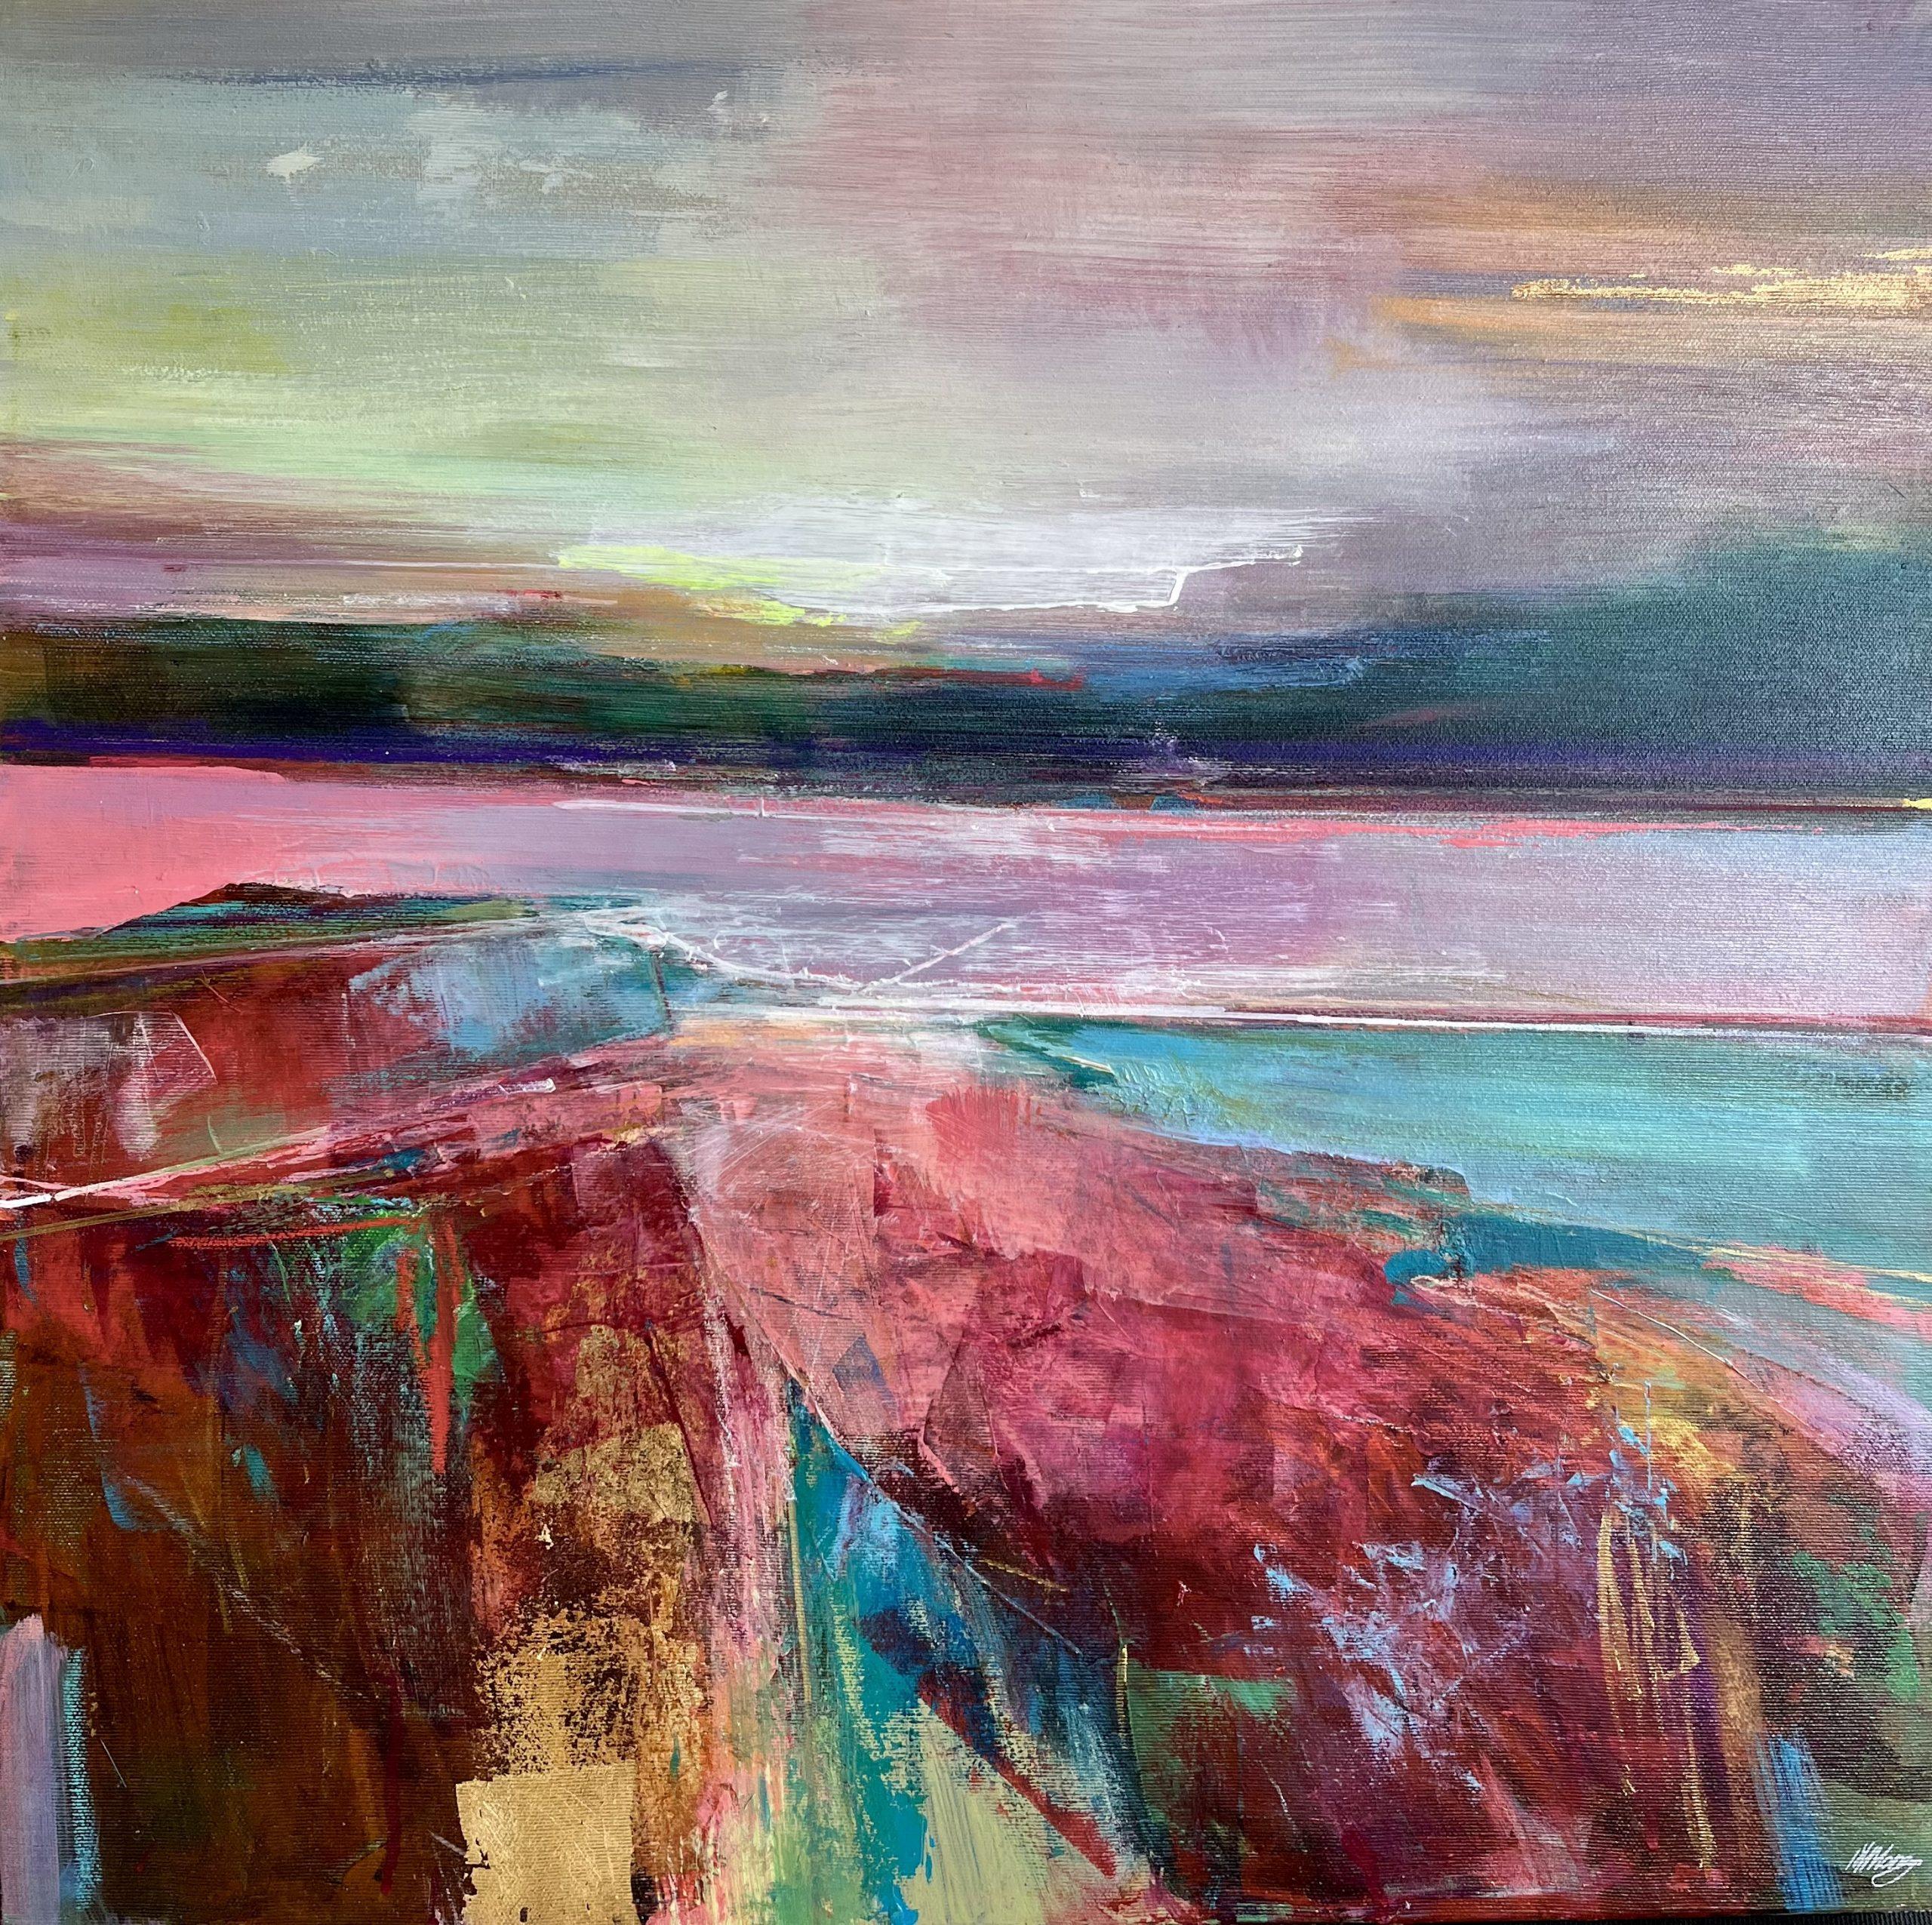 Towards the evening 4-original abstract seascape landscape painting- modern art